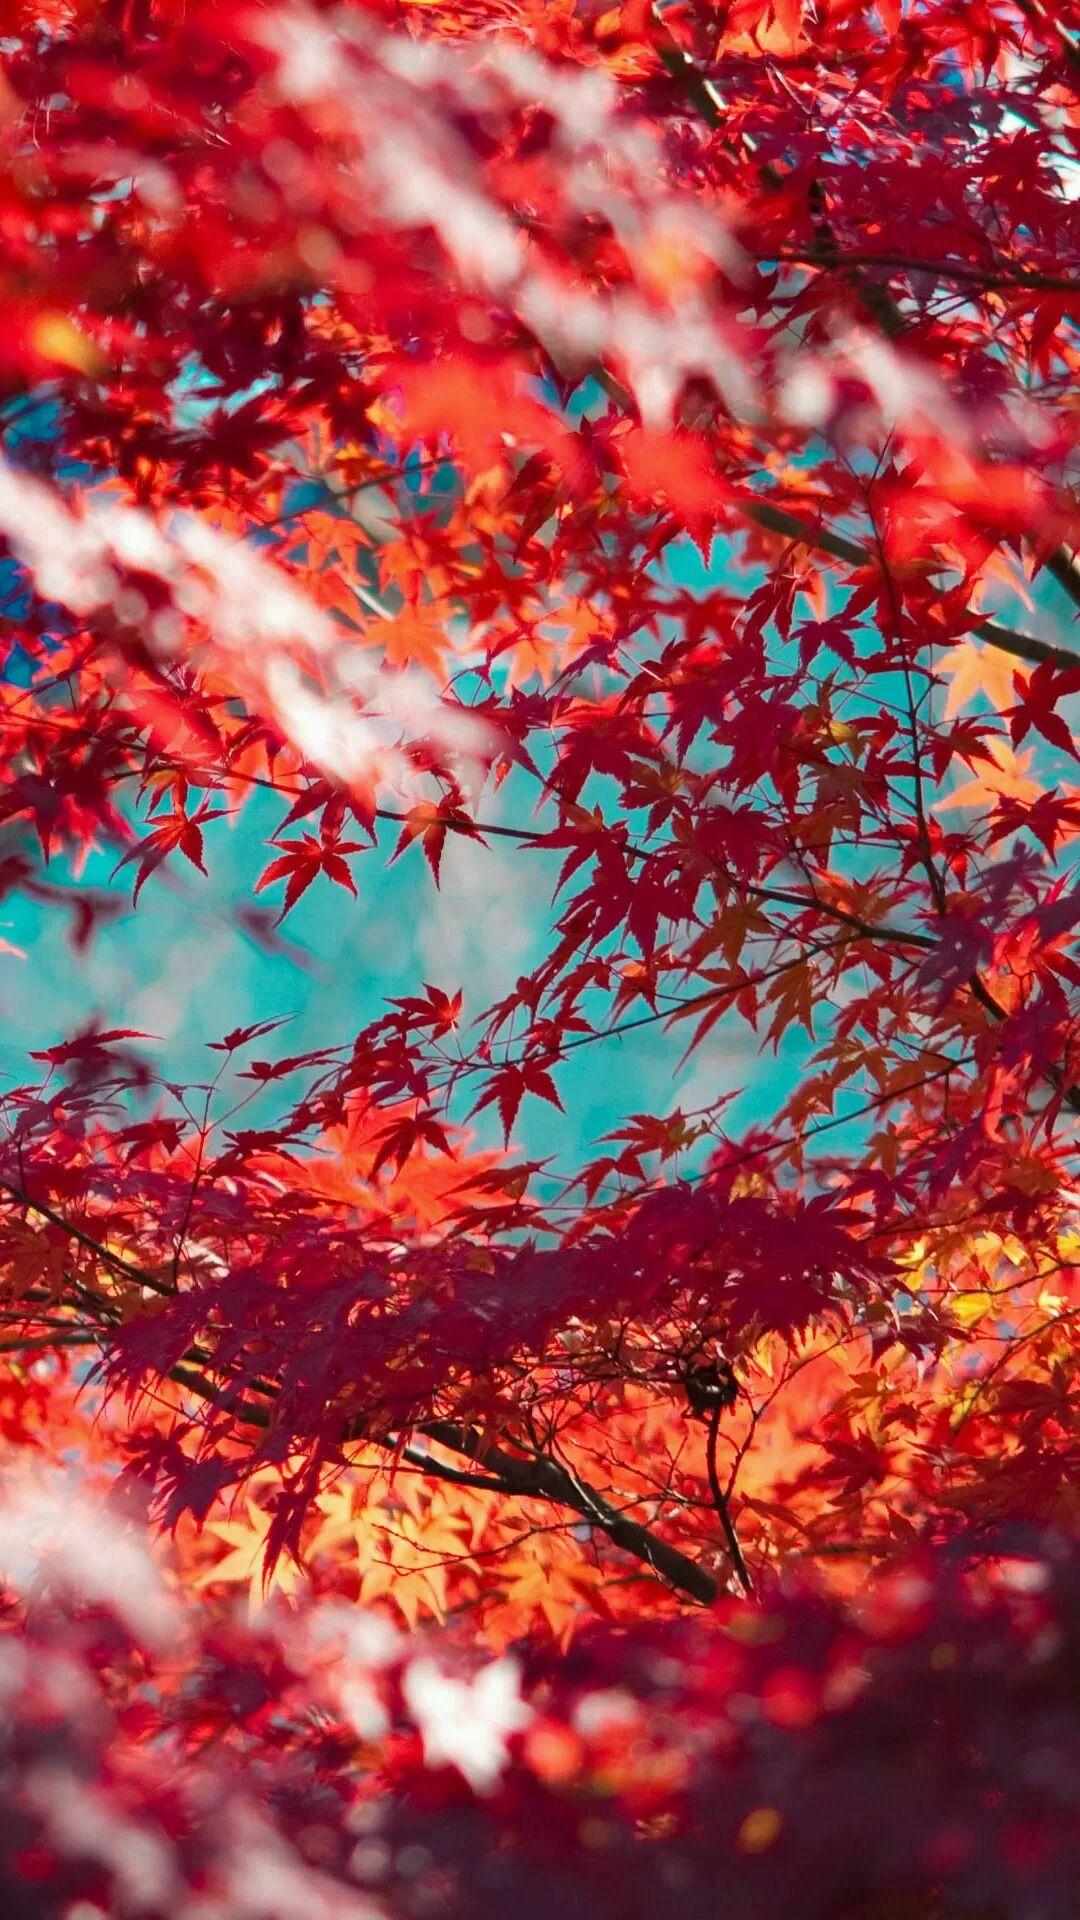 500 Maple Leaf Pictures HD  Download Free Images on Unsplash